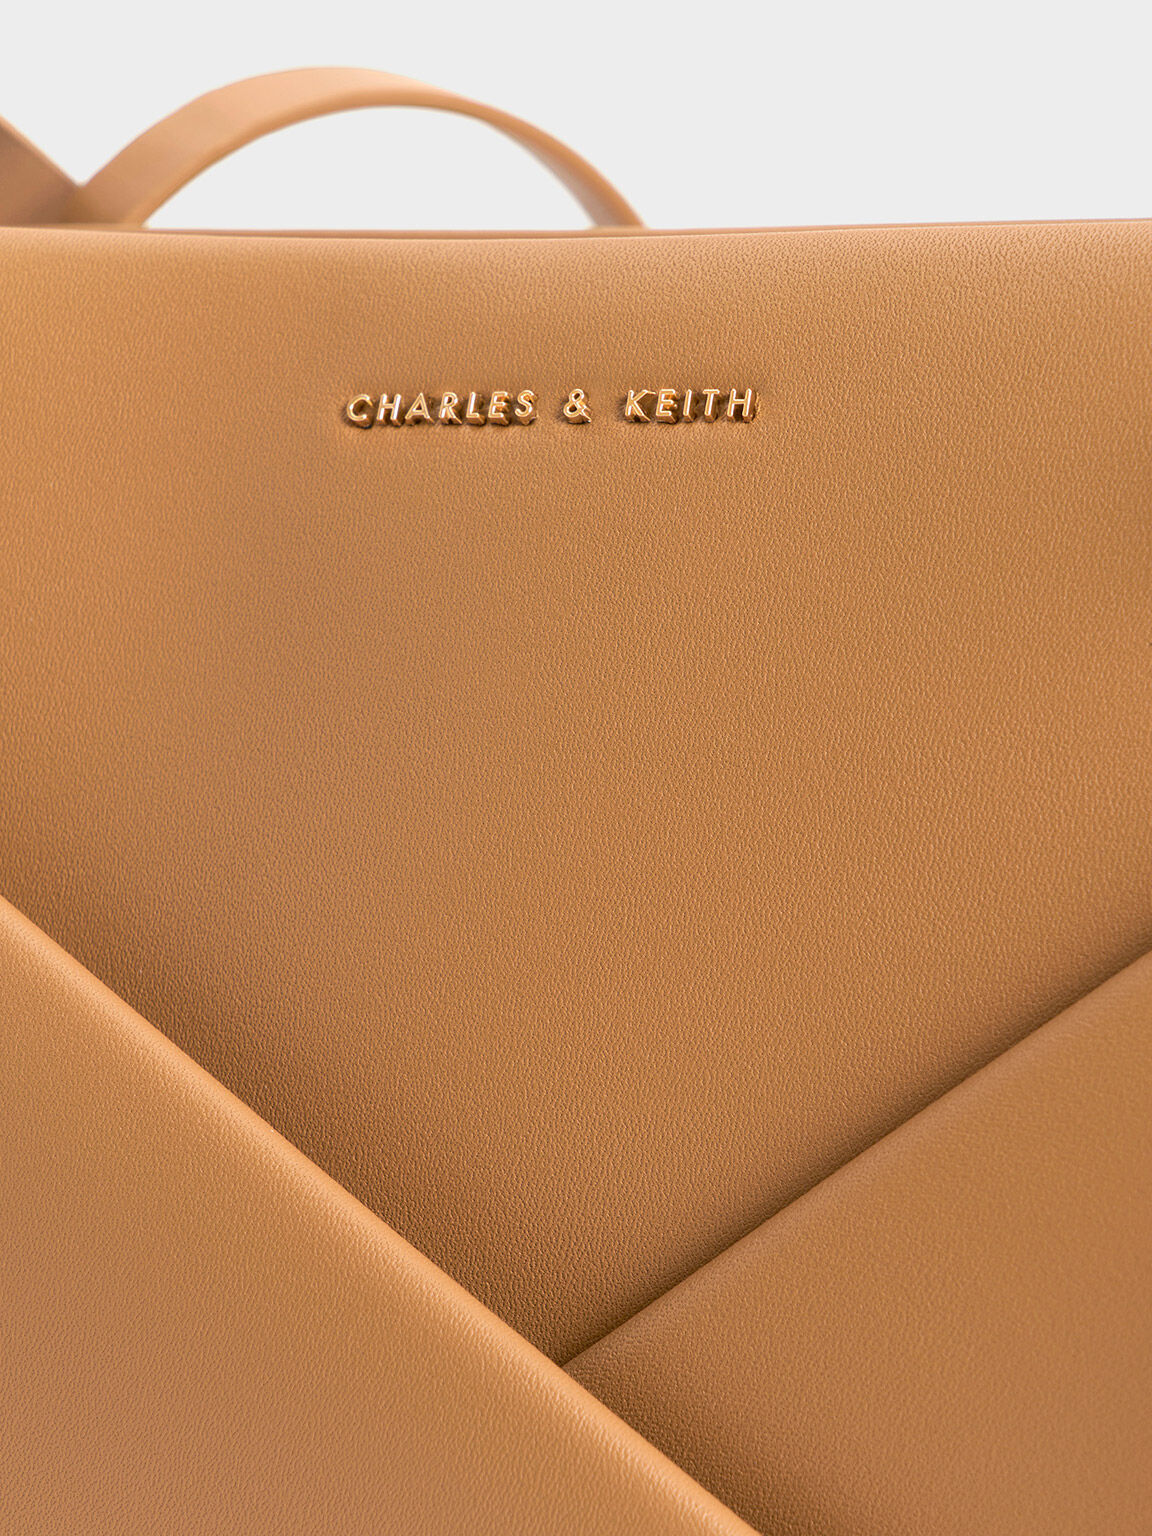 go to work bag 🖤 @CHARLES & KEITH